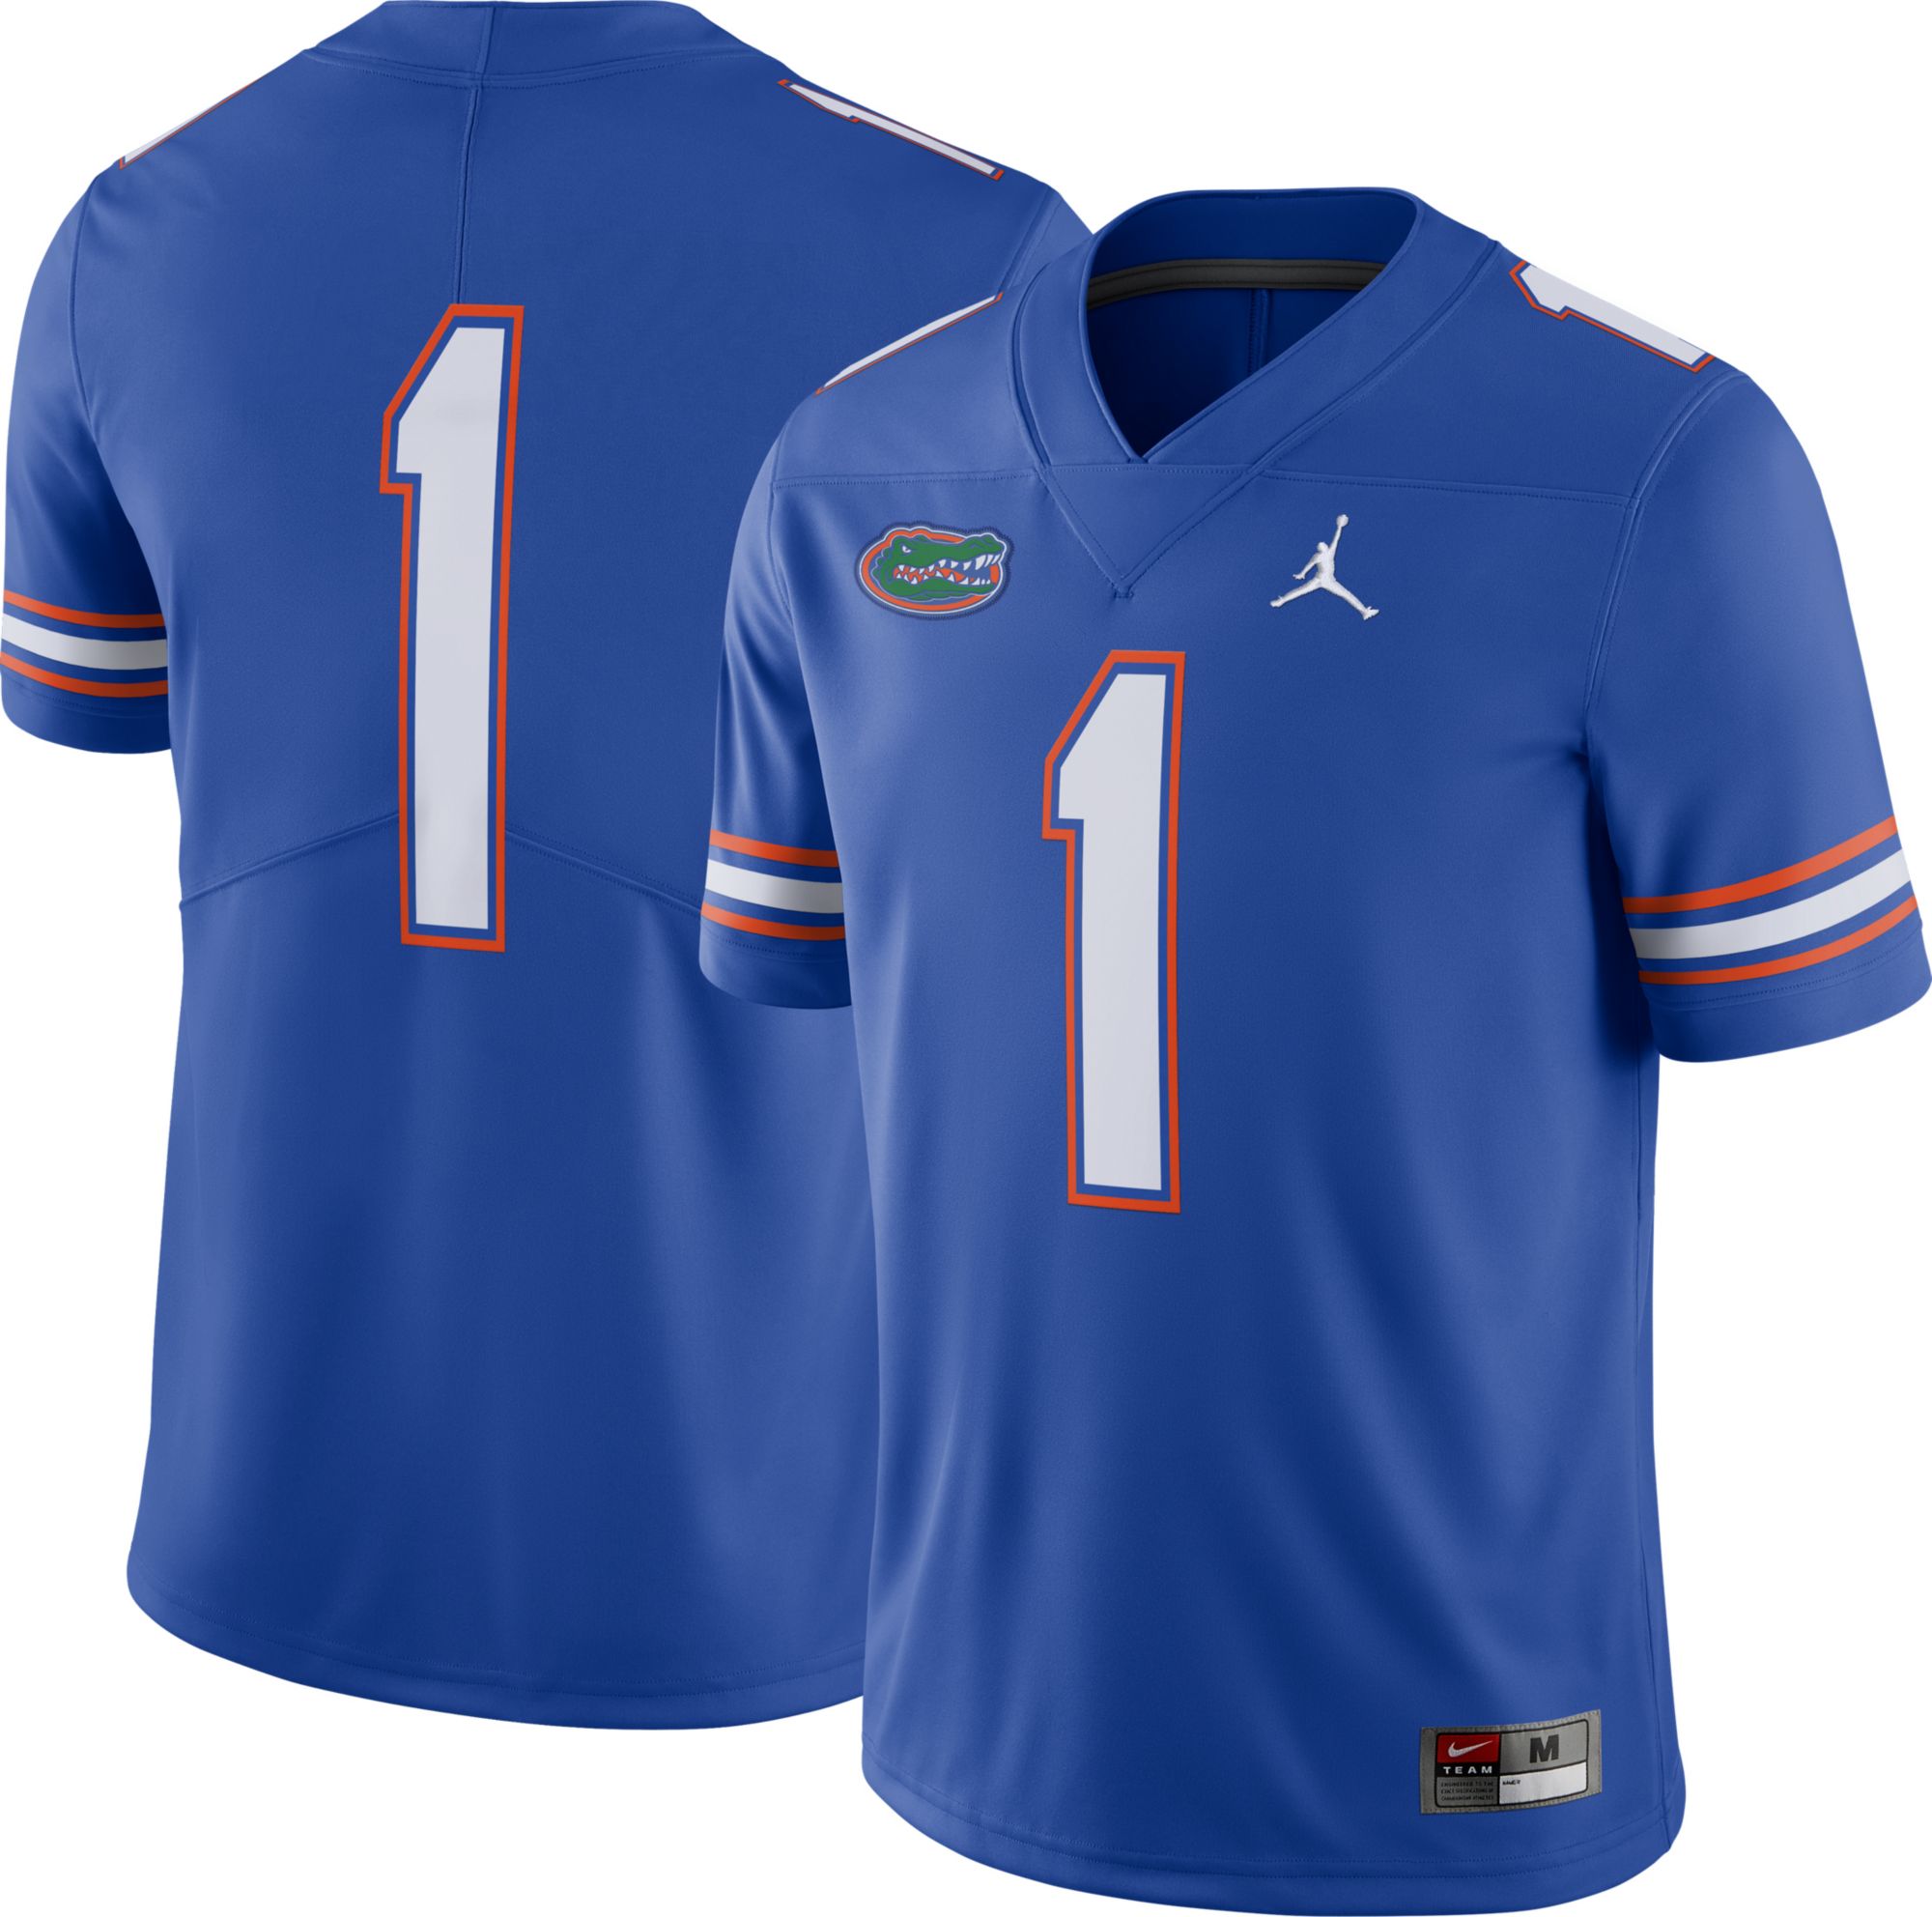 Florida Gators blue jersey